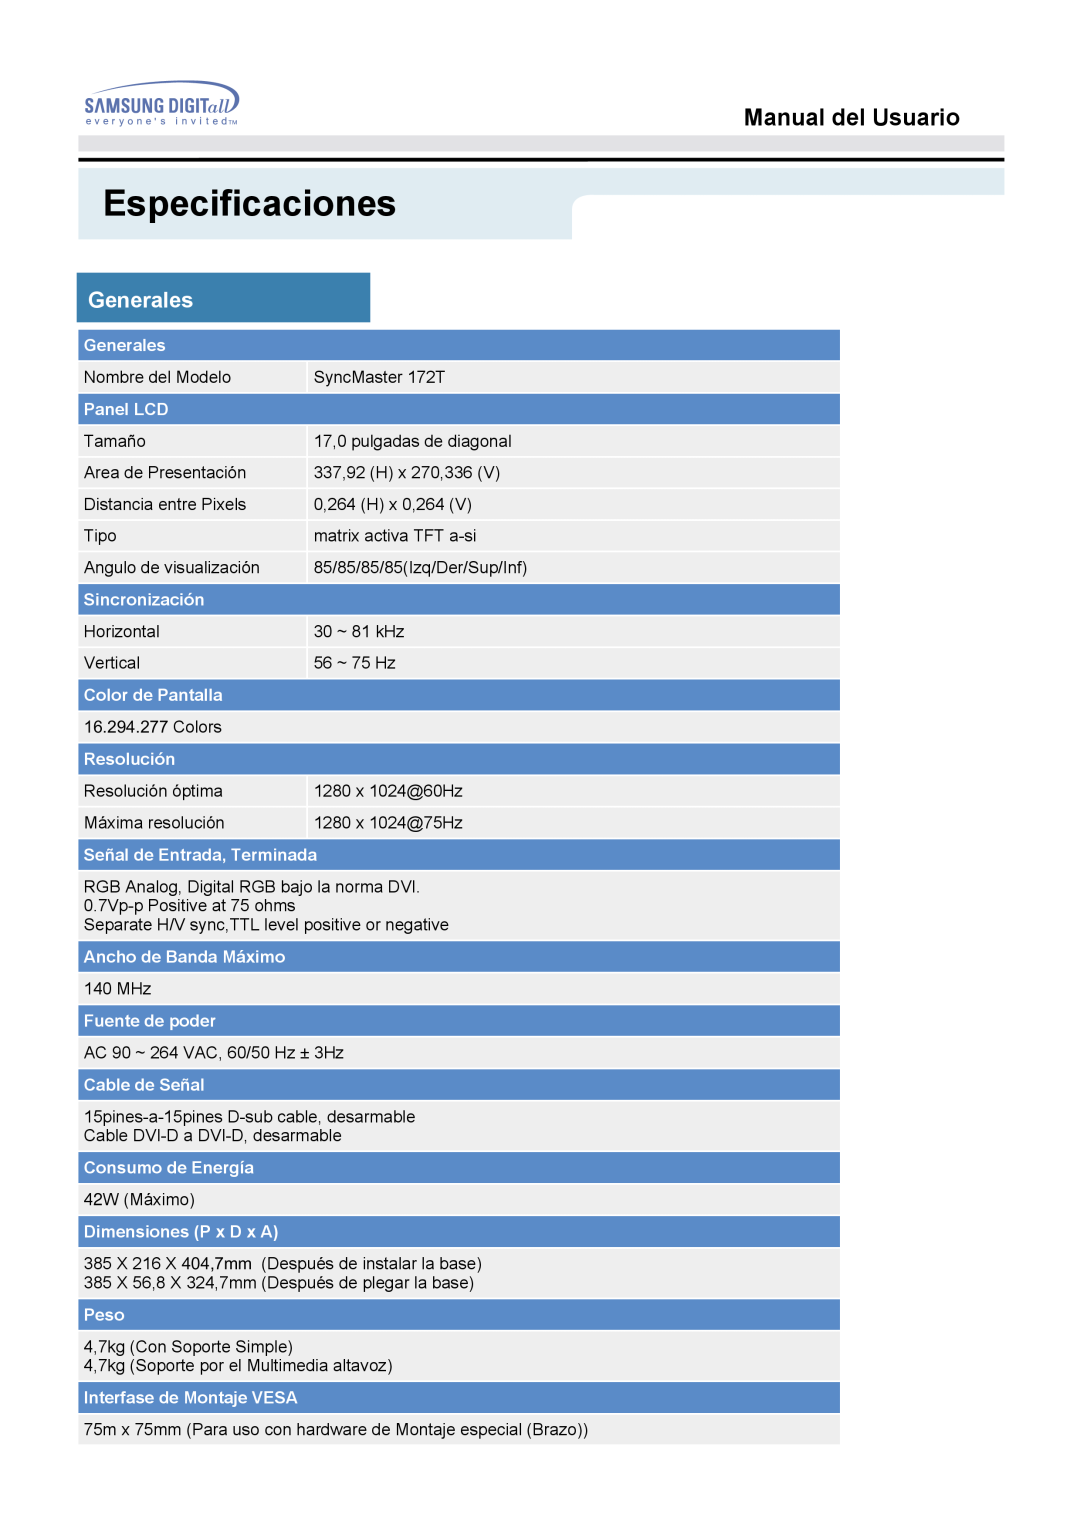 Samsung MO17ESZS/EDC, MO17ESZSZ/EDC, MO17ESDS/EDC, MO17PSDS/EDC manual Especificaciones, Manual del Usuario, Generales 